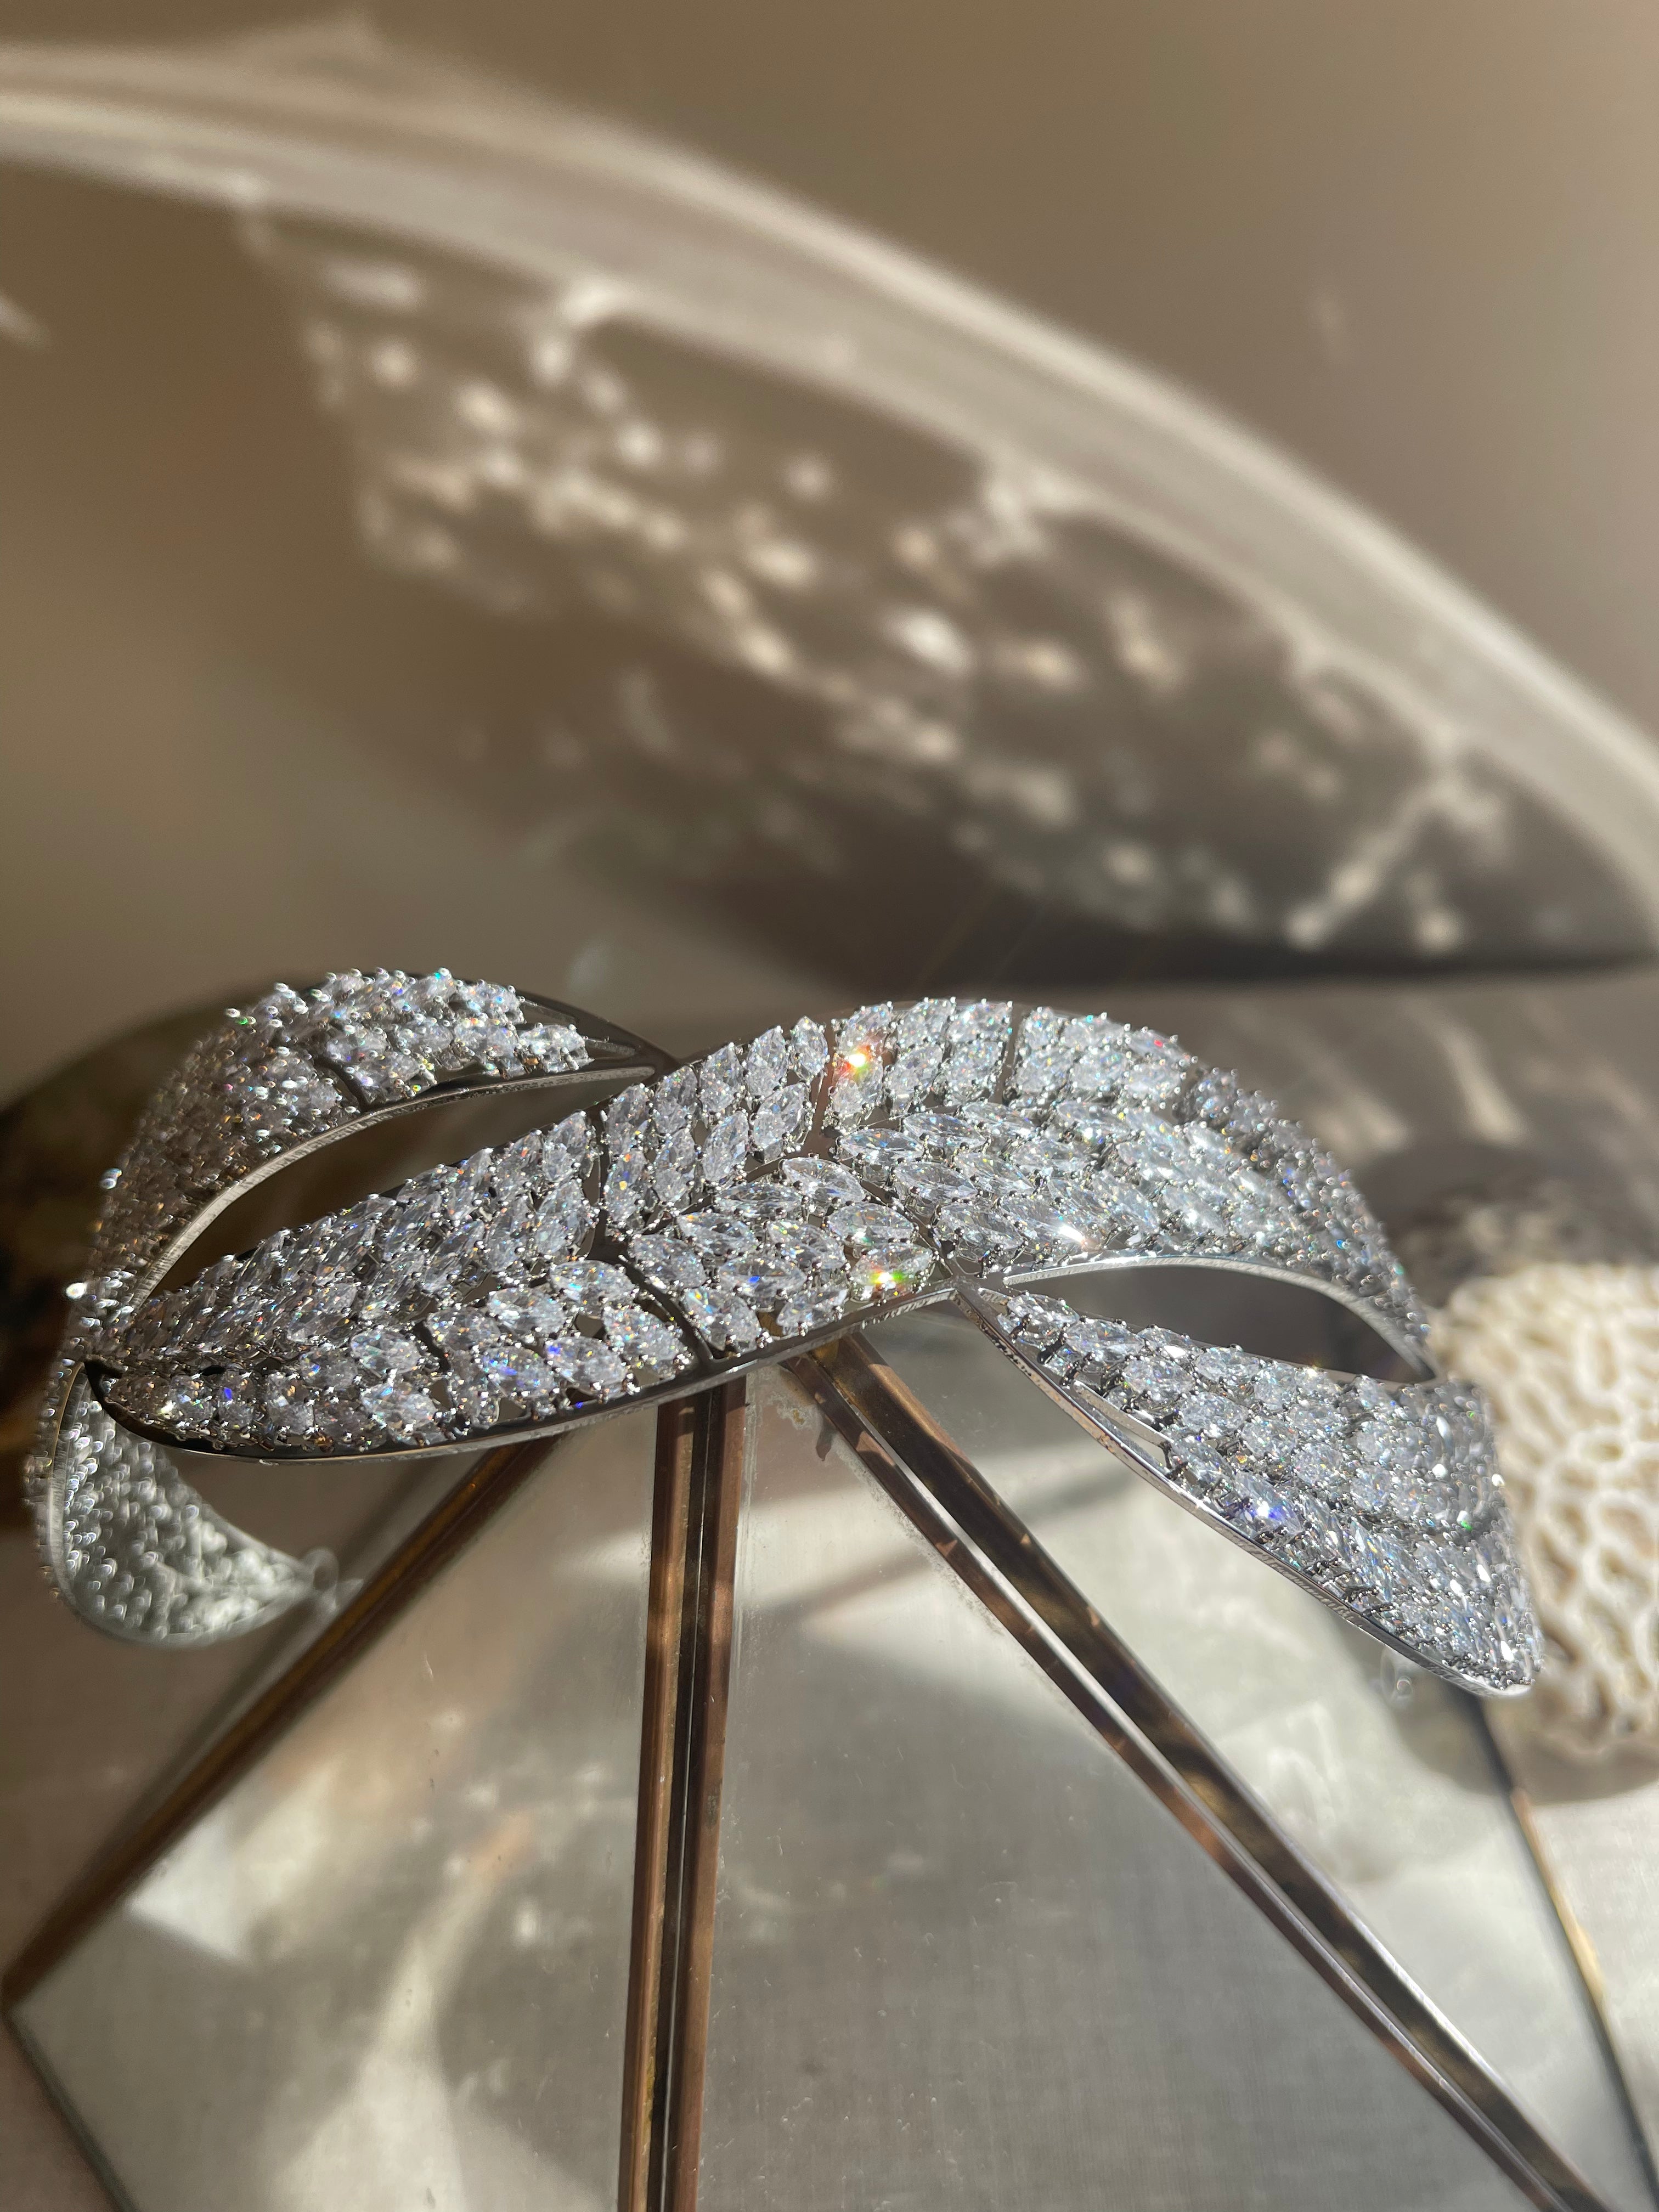 Sparkling Cubic Zirconia Tiara, Unique Crystal Headband For Glamorous Wedding, Gala or Occasion ~ Artio